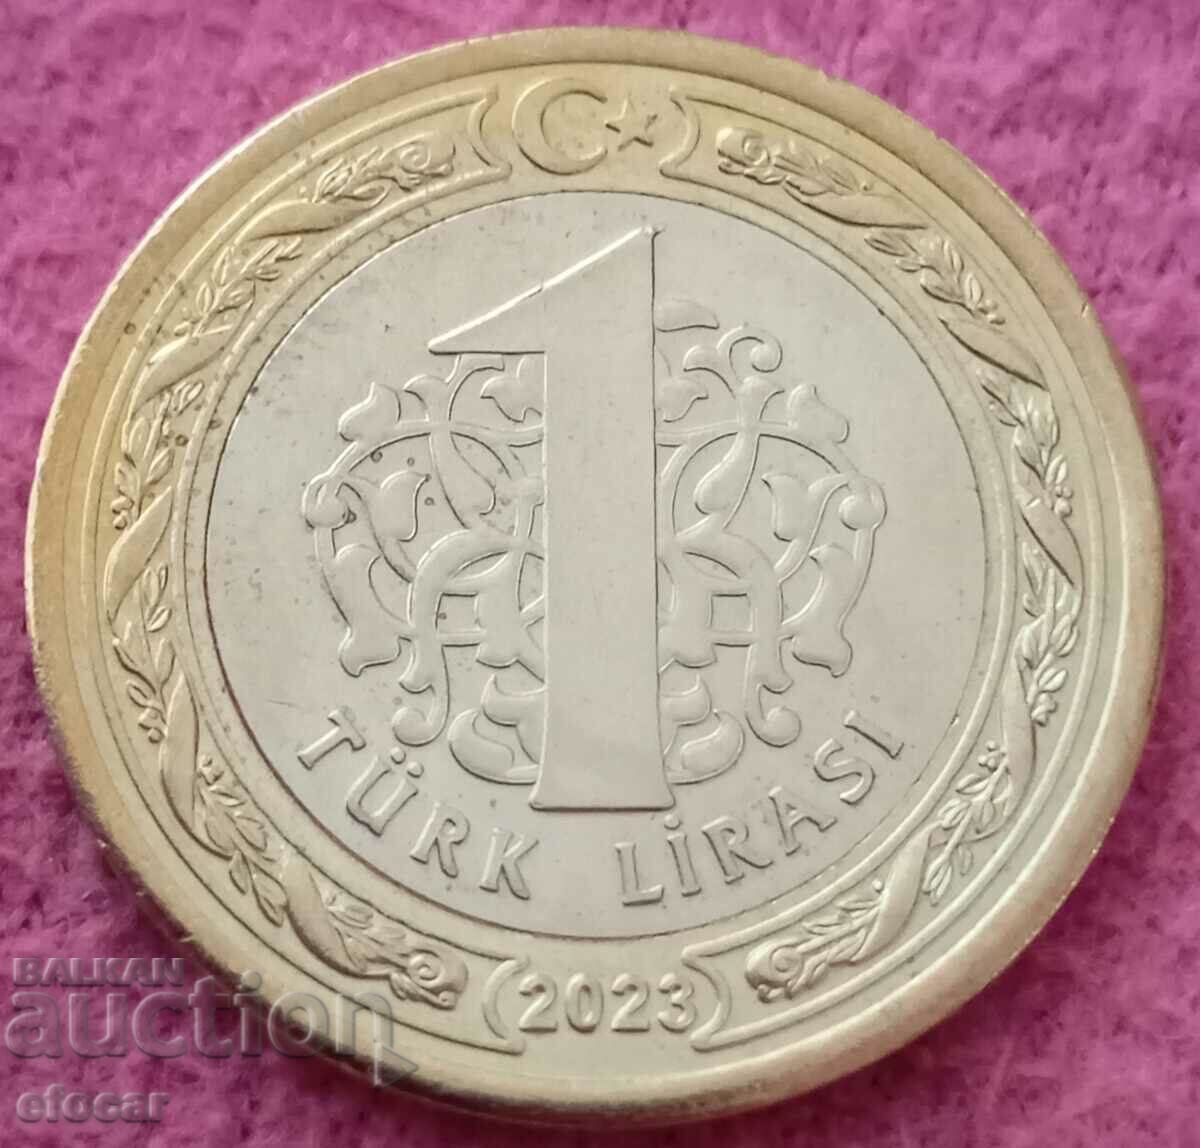 1 lira Turcia 2023 ani